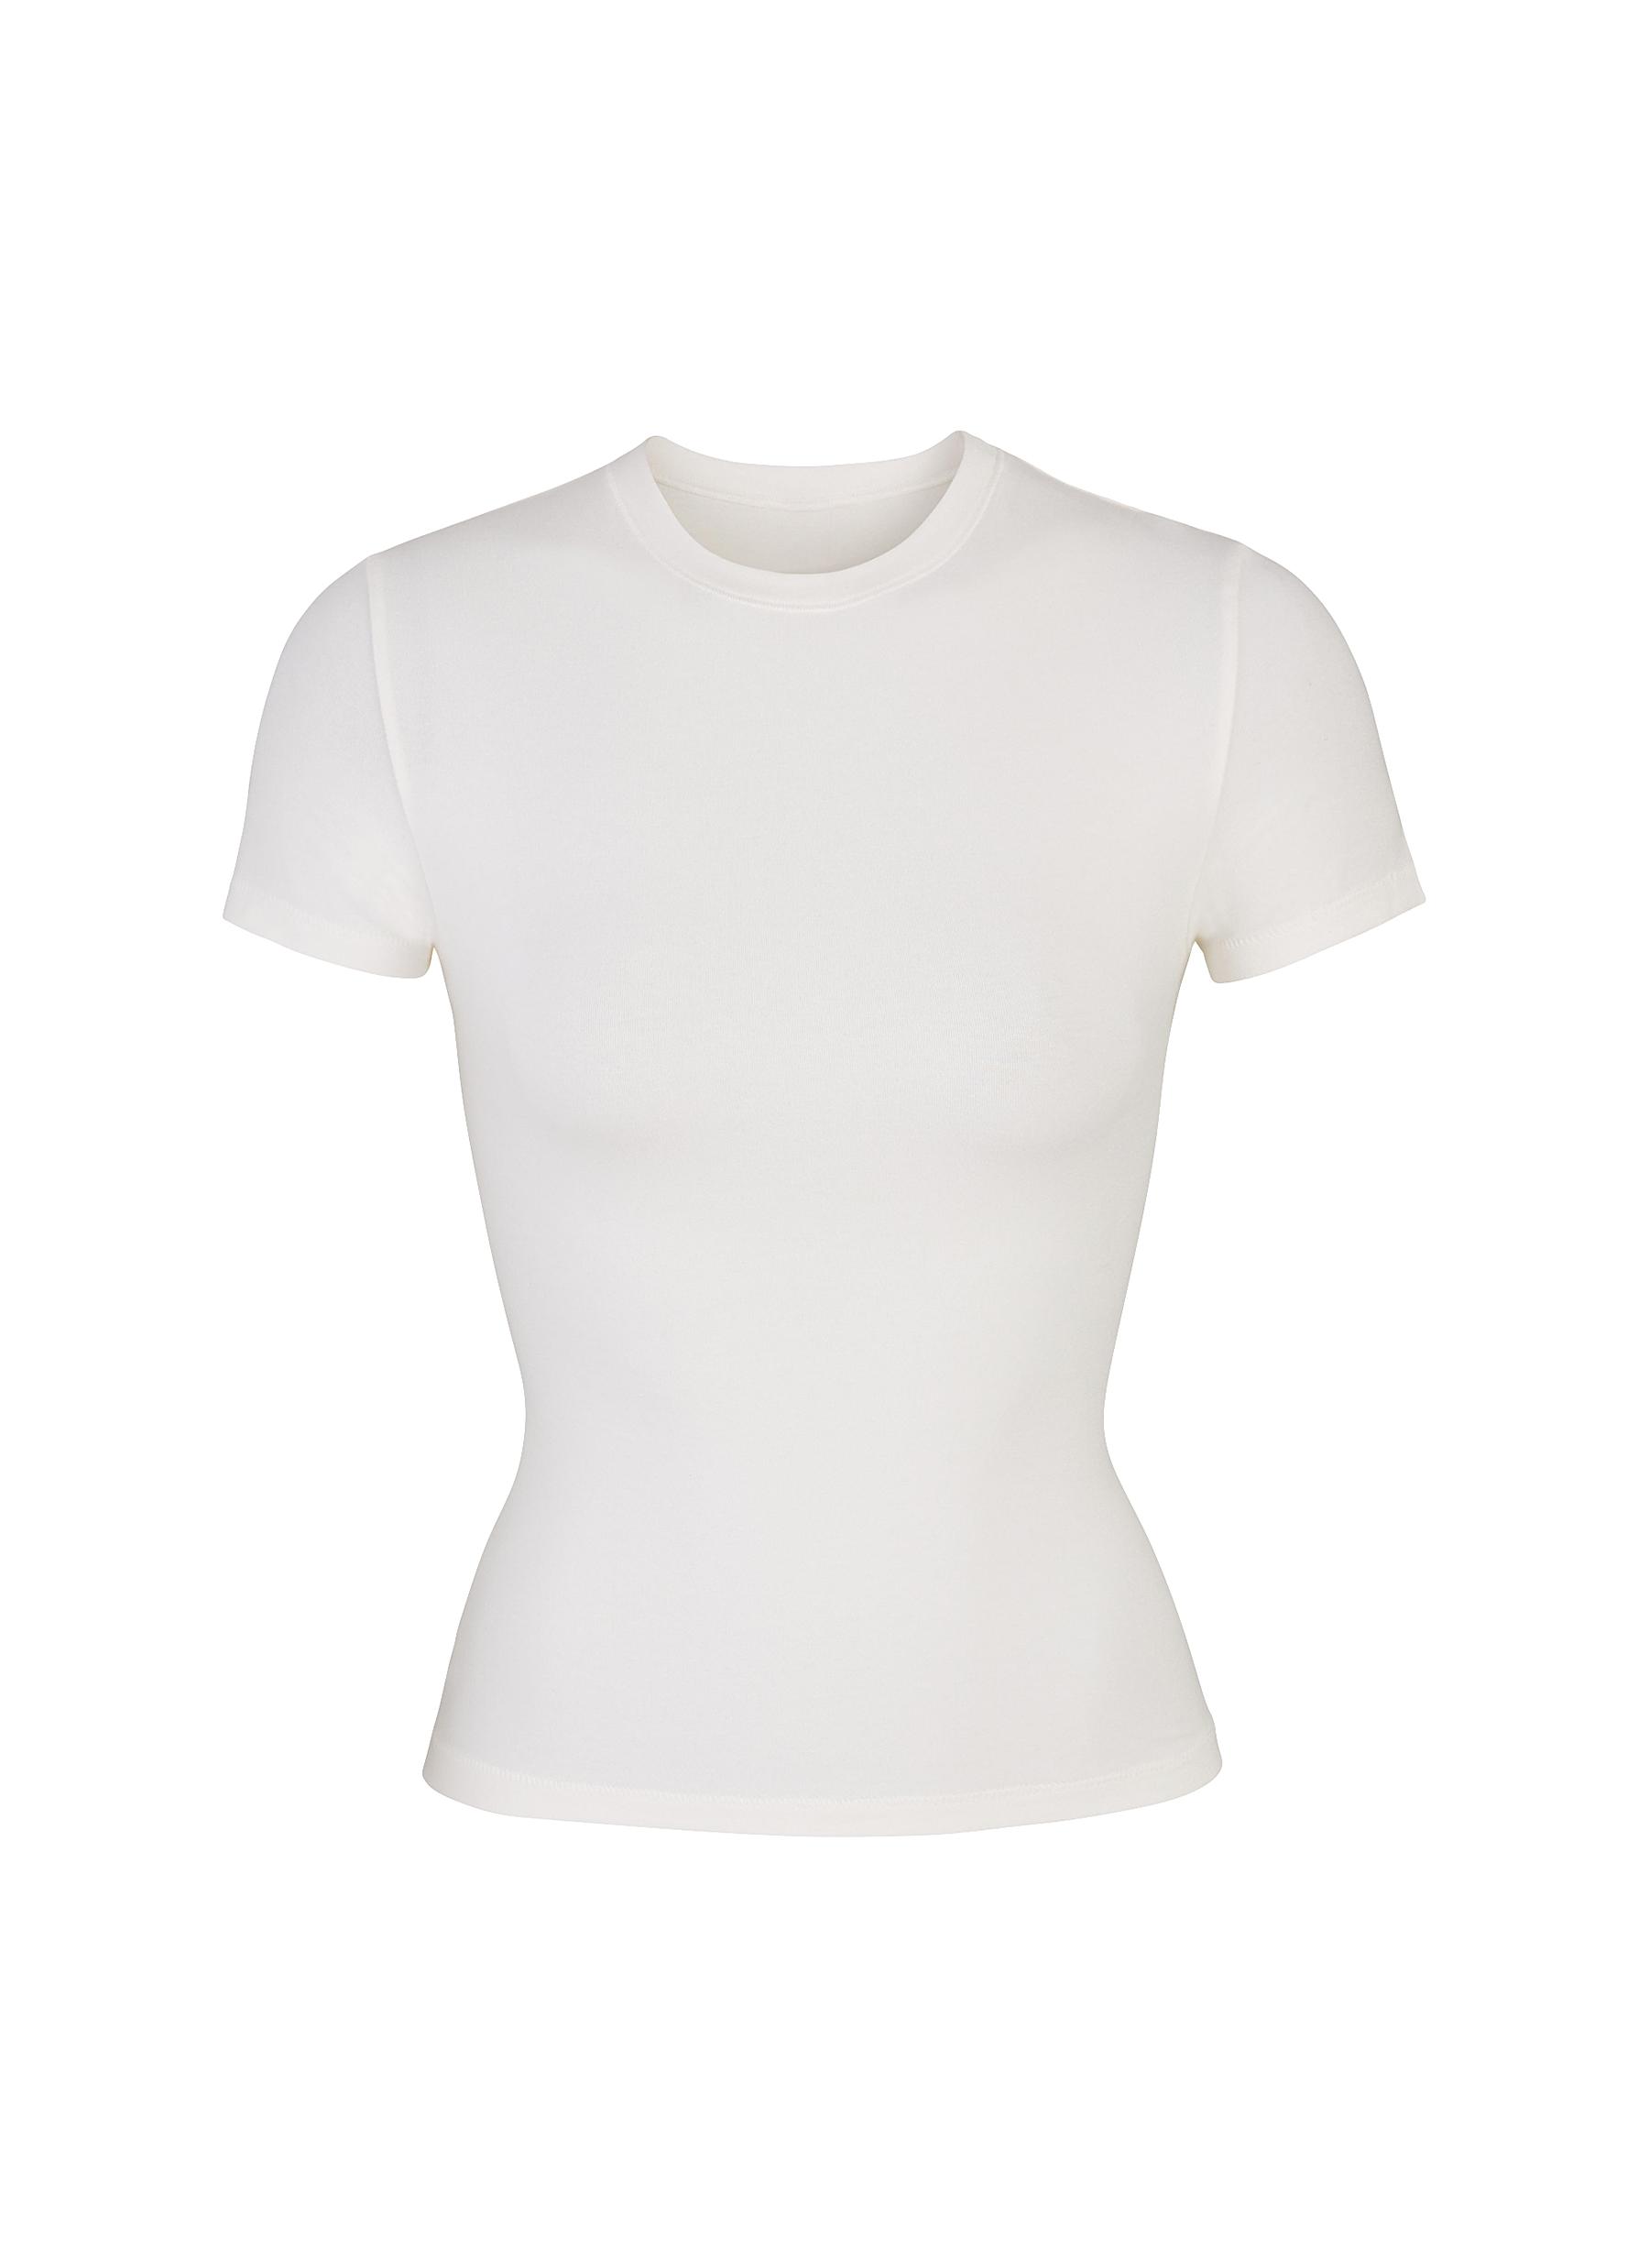 SKIMS, Cotton Jersey T-Shirt, Women